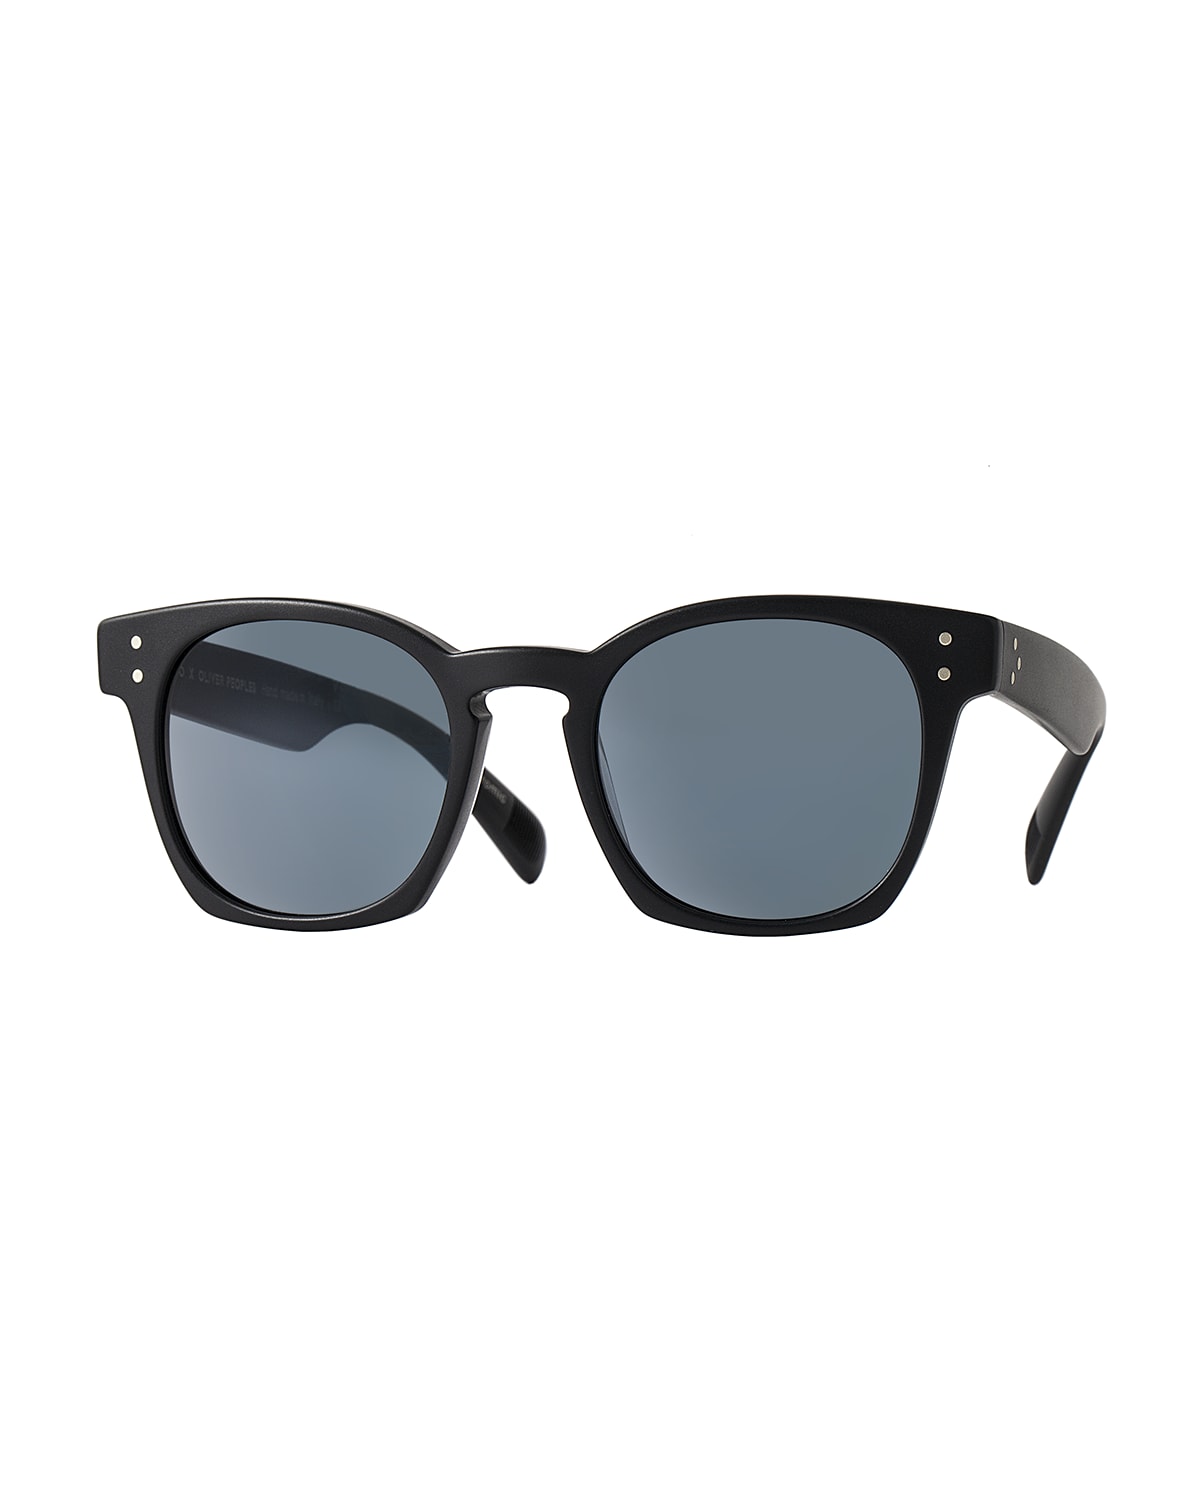 Oliver Peoples Byredo 50 Photochromic Sunglasses, Black